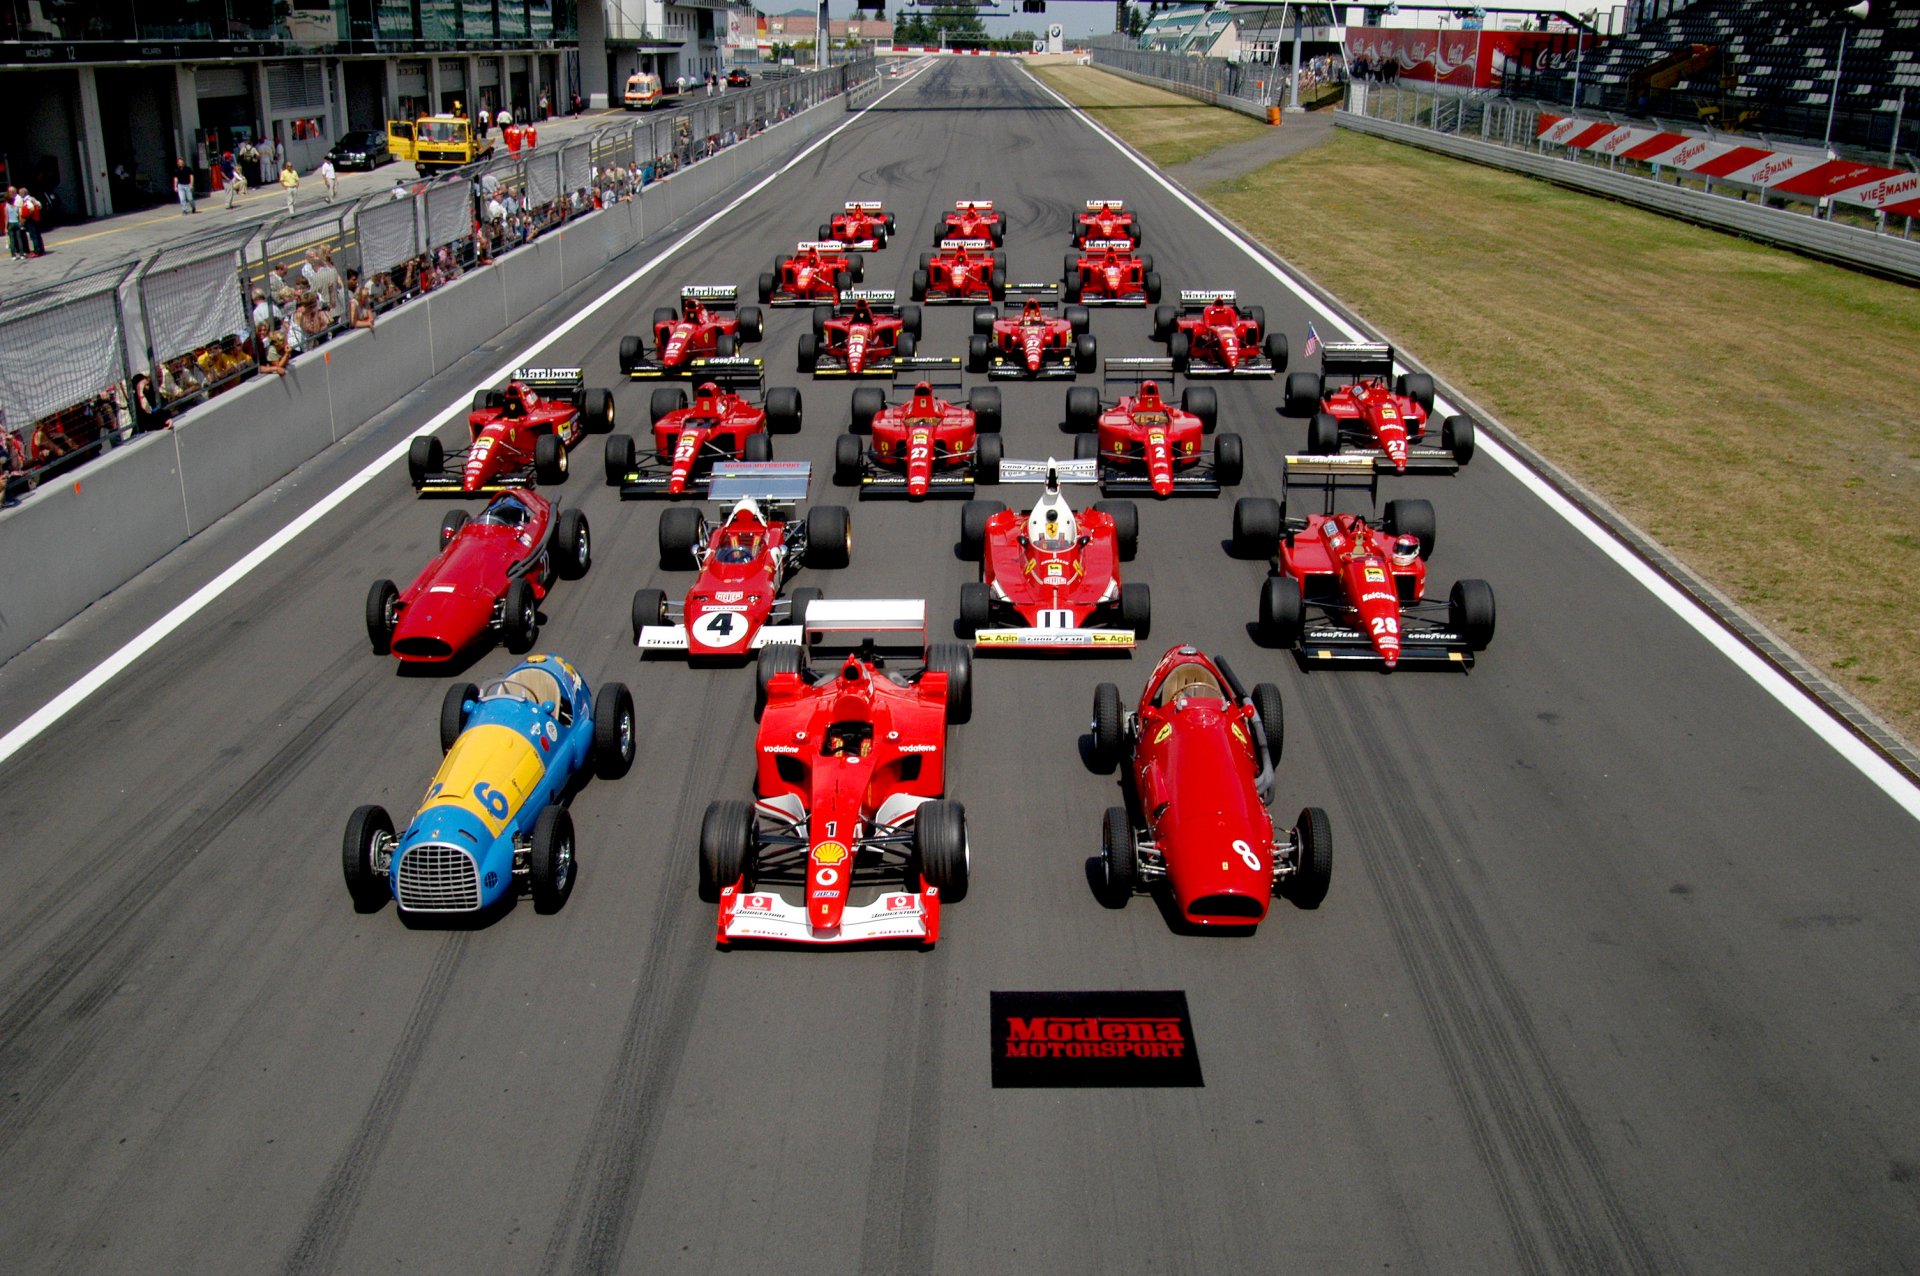 Modena Motorsport Ferrari Track Days. | Photo  Credit: Edwin van Nes